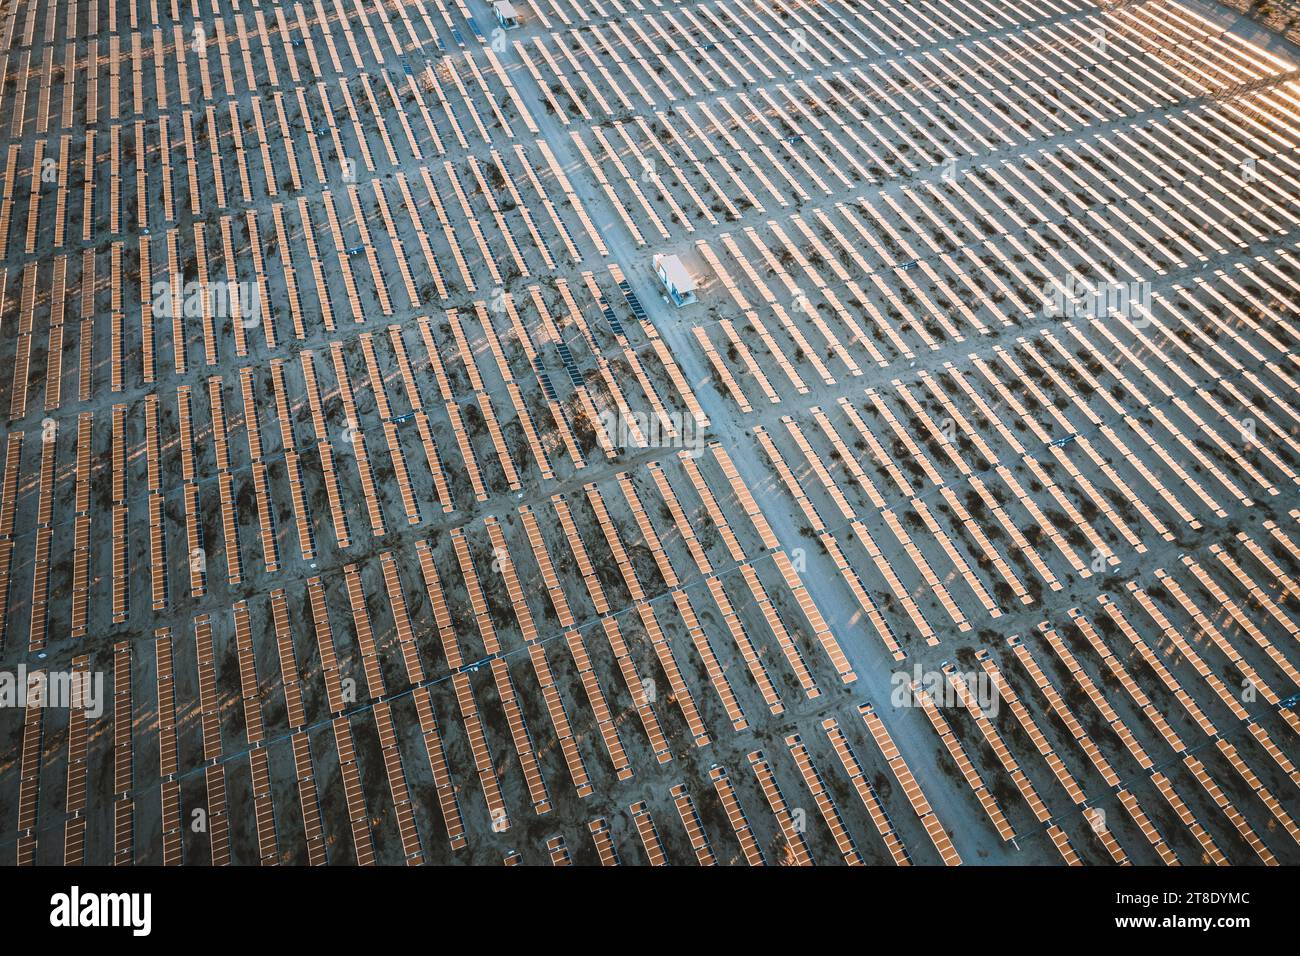 Large industrial solar panel array in the California desert. Stock Photo